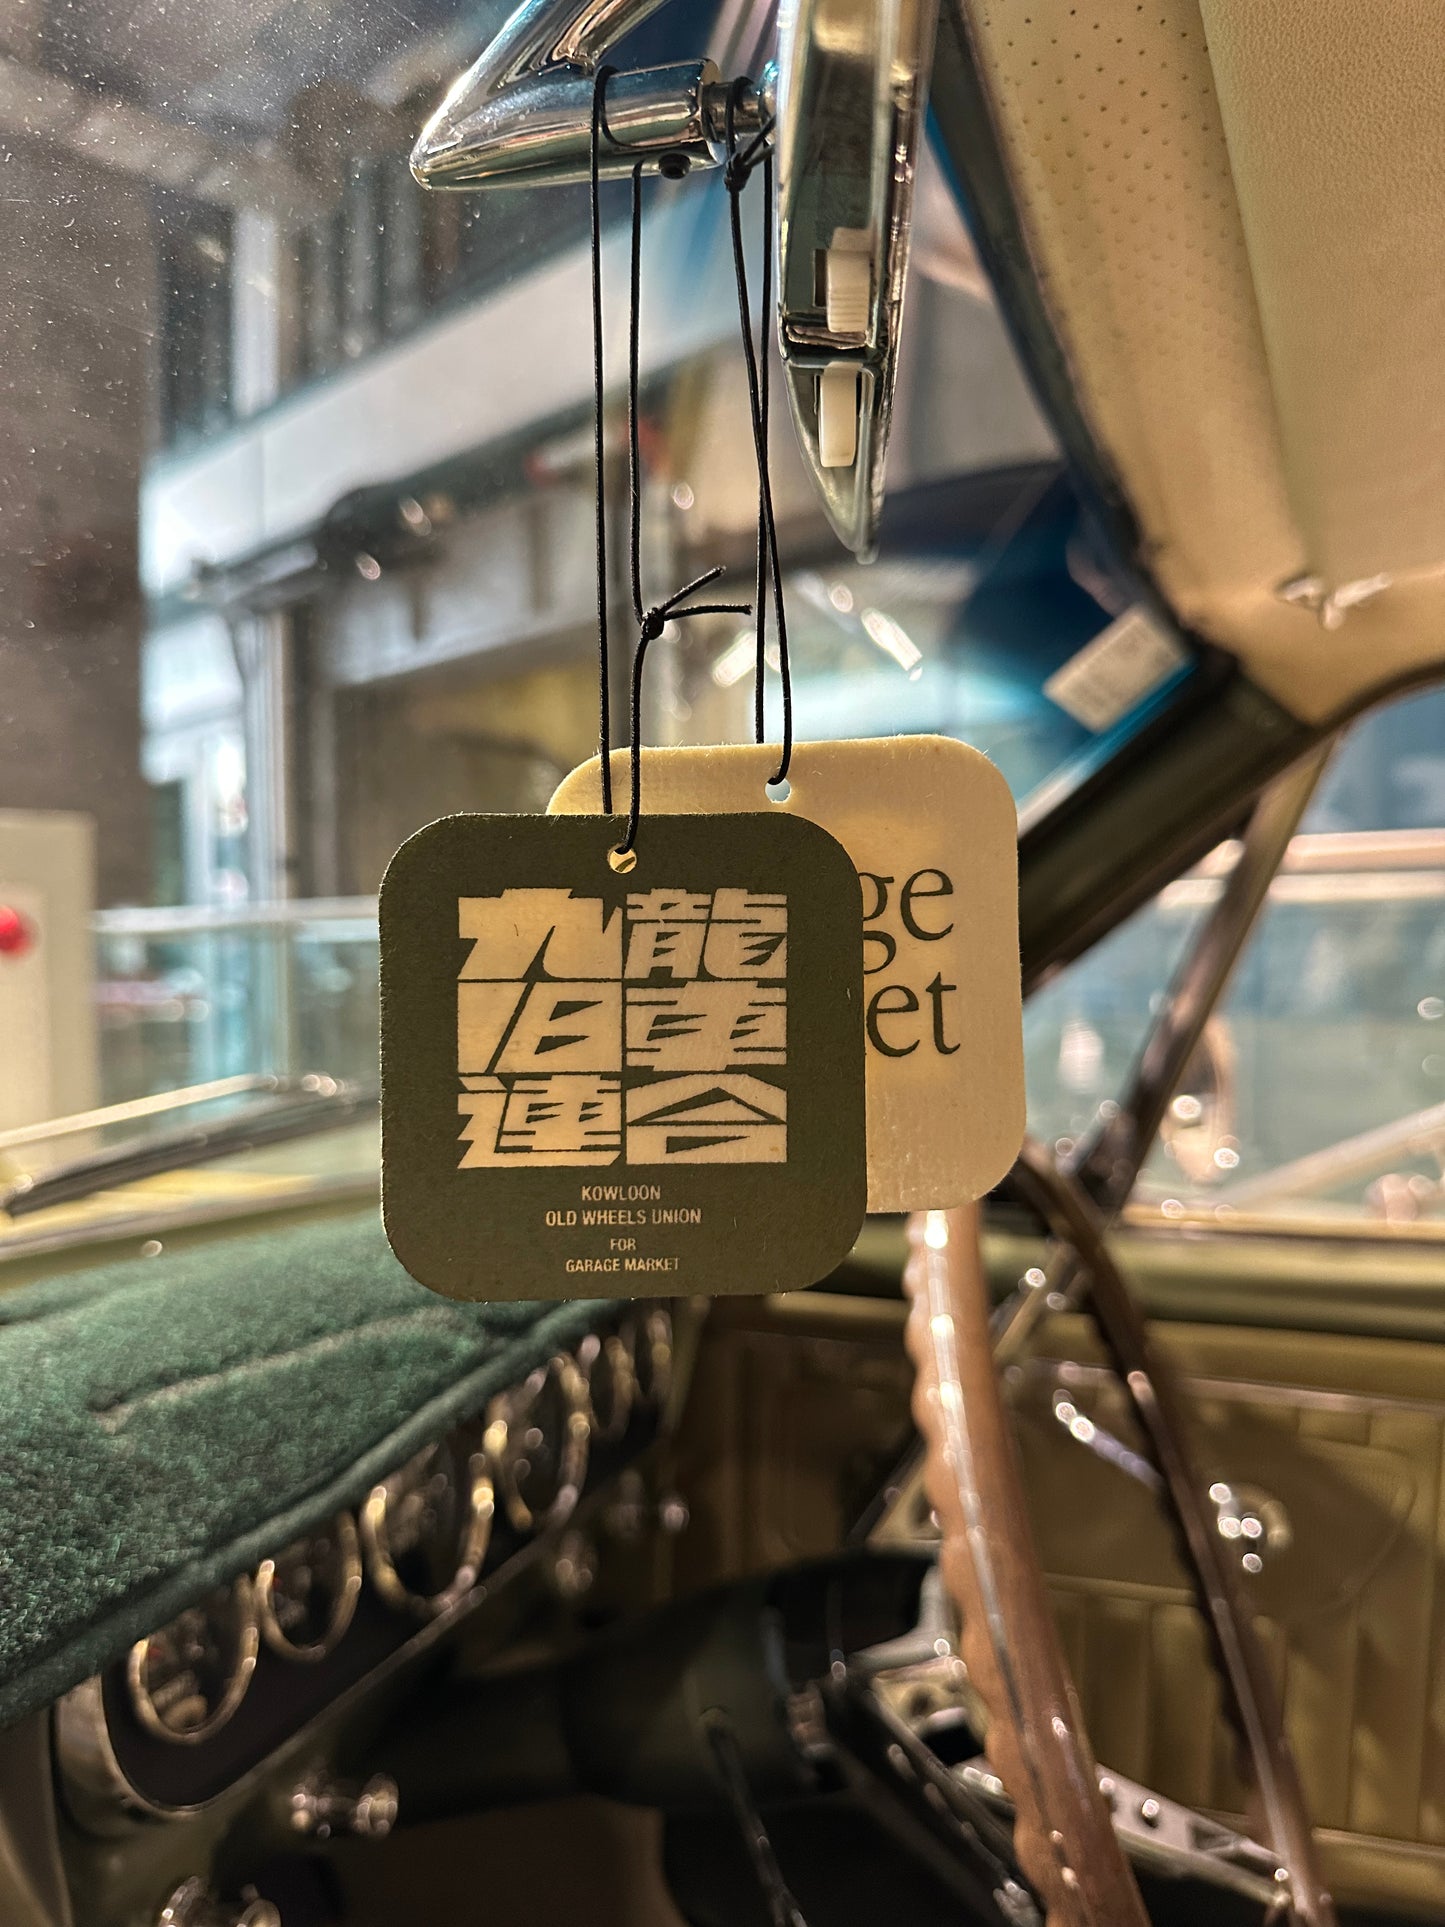 Kowloon Old Wheels Union Fragrance Car Tag